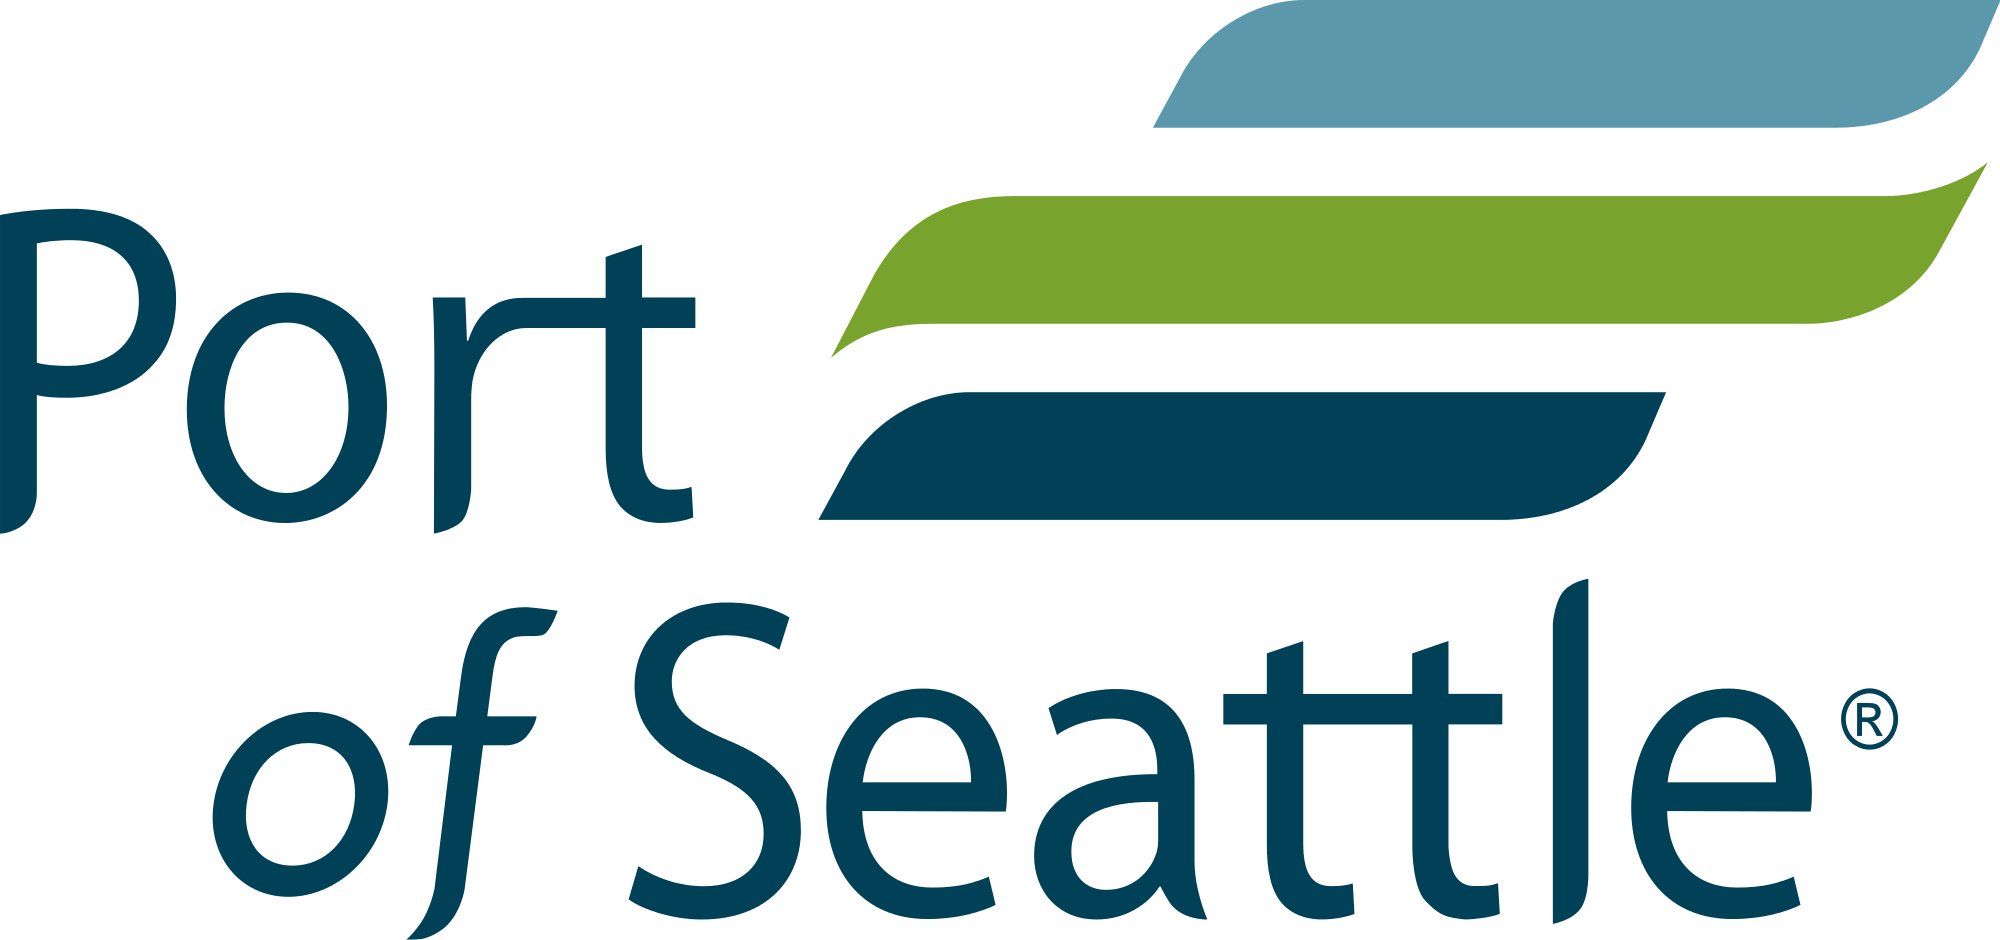 Seattle Logo - Port of Seattle Logo.svg